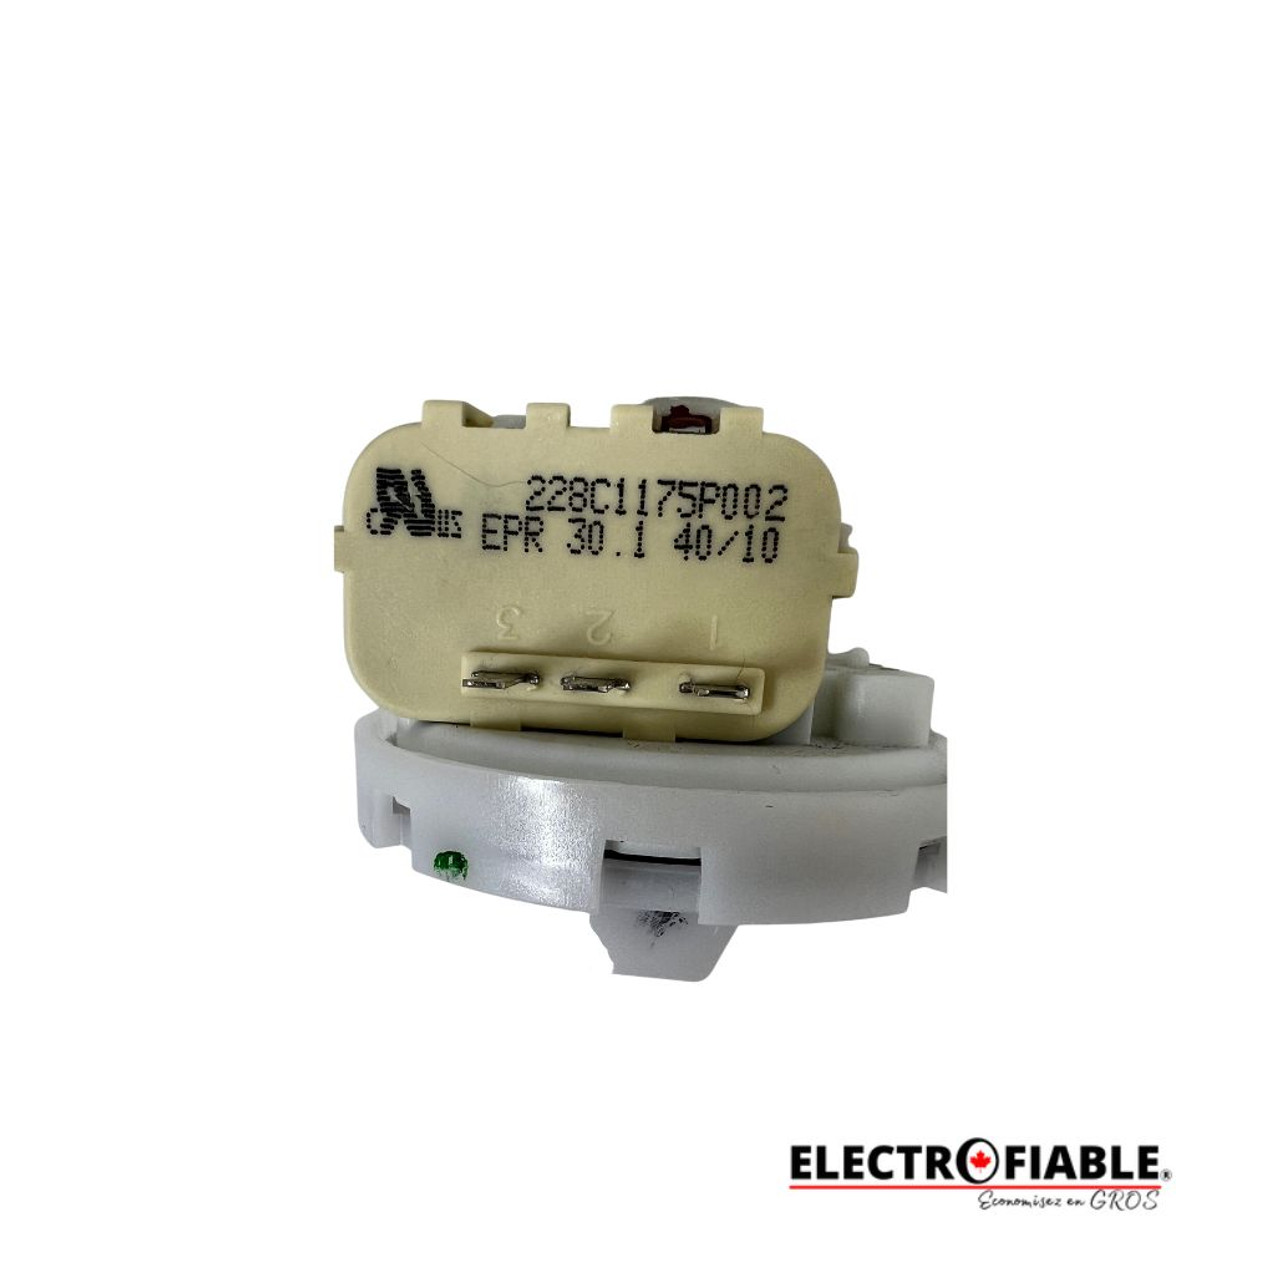 228C1175P002 Washer Pressure Switch